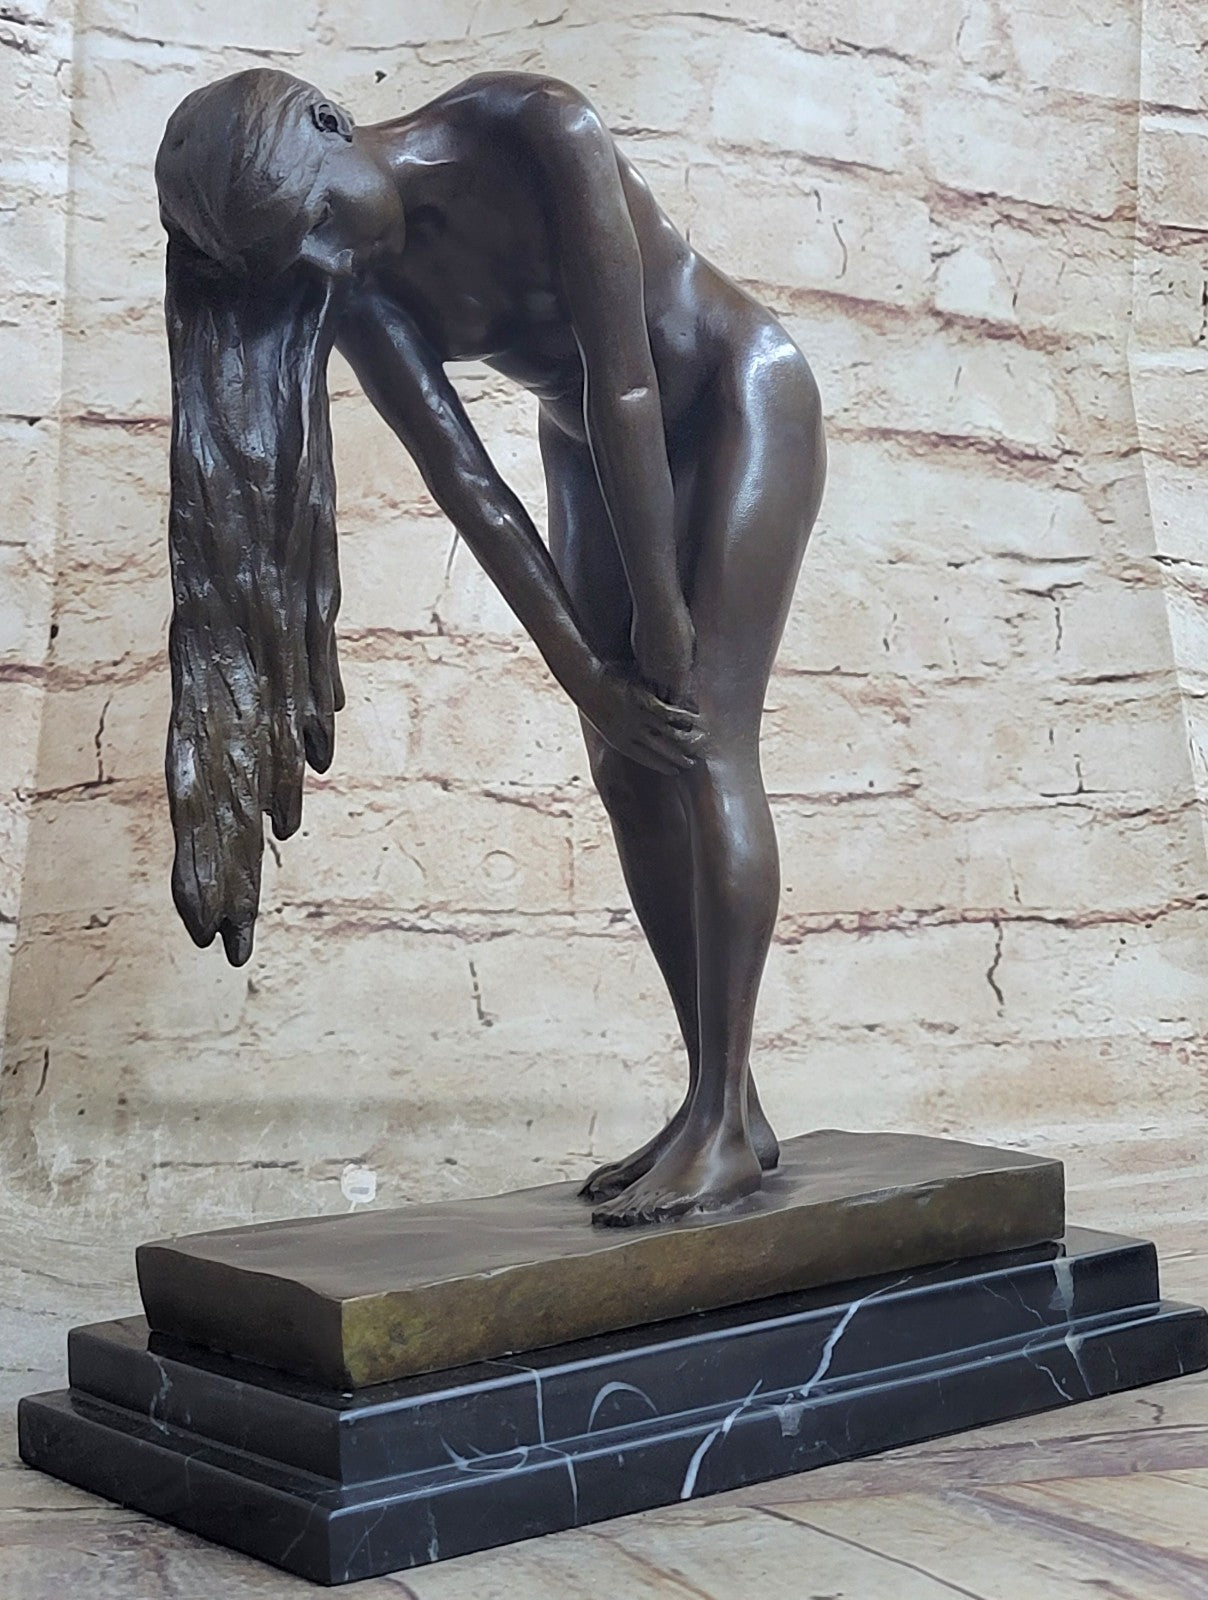 Handcrafted bronze sculpture SALE Nude Deco Art Vitaleh Quality Artwork